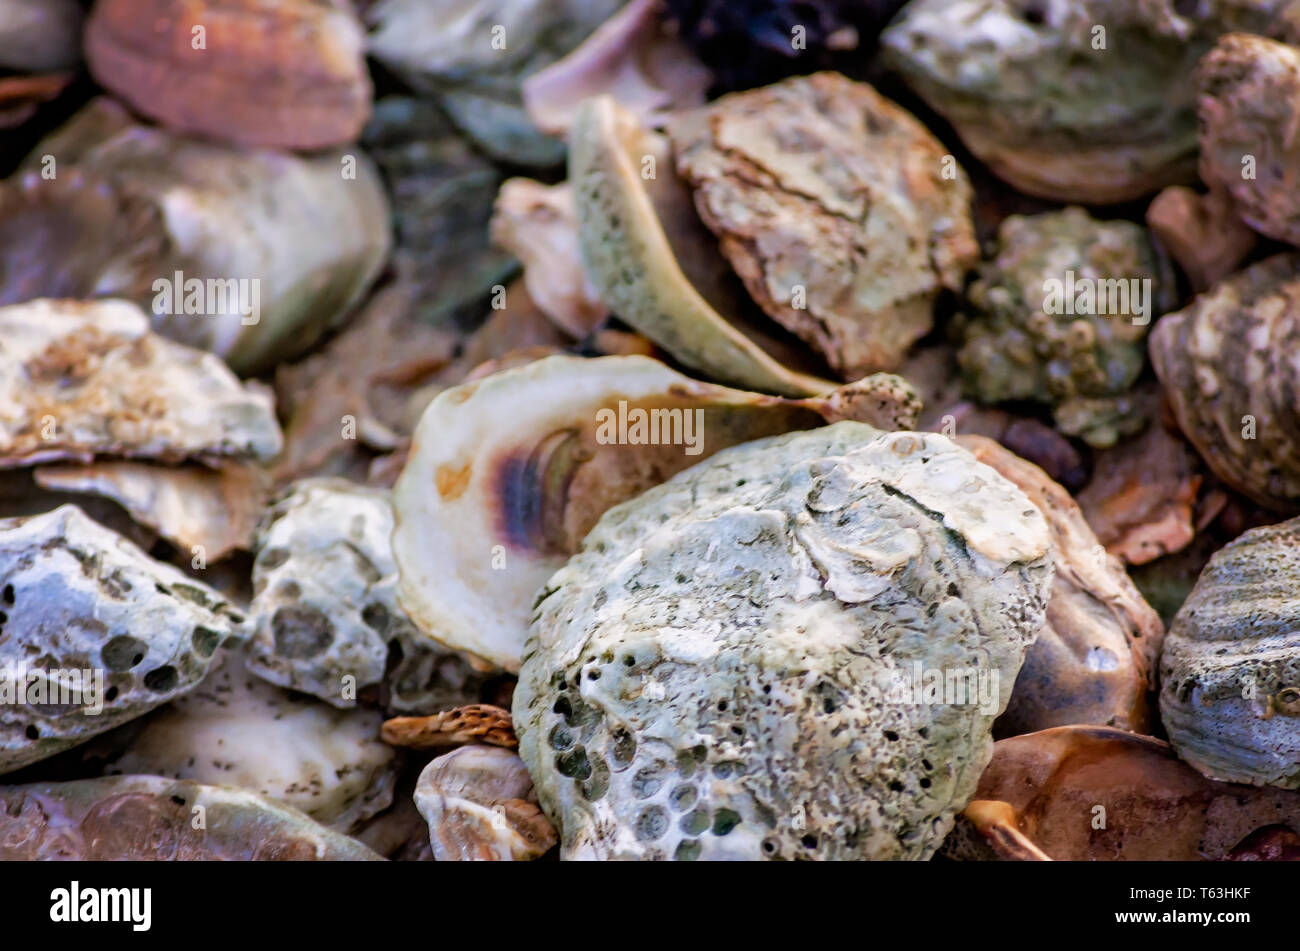 Empty oyster shells lay on the beach, Aug. 29, 2013, in Bayou La Batre, Alabama. Stock Photo